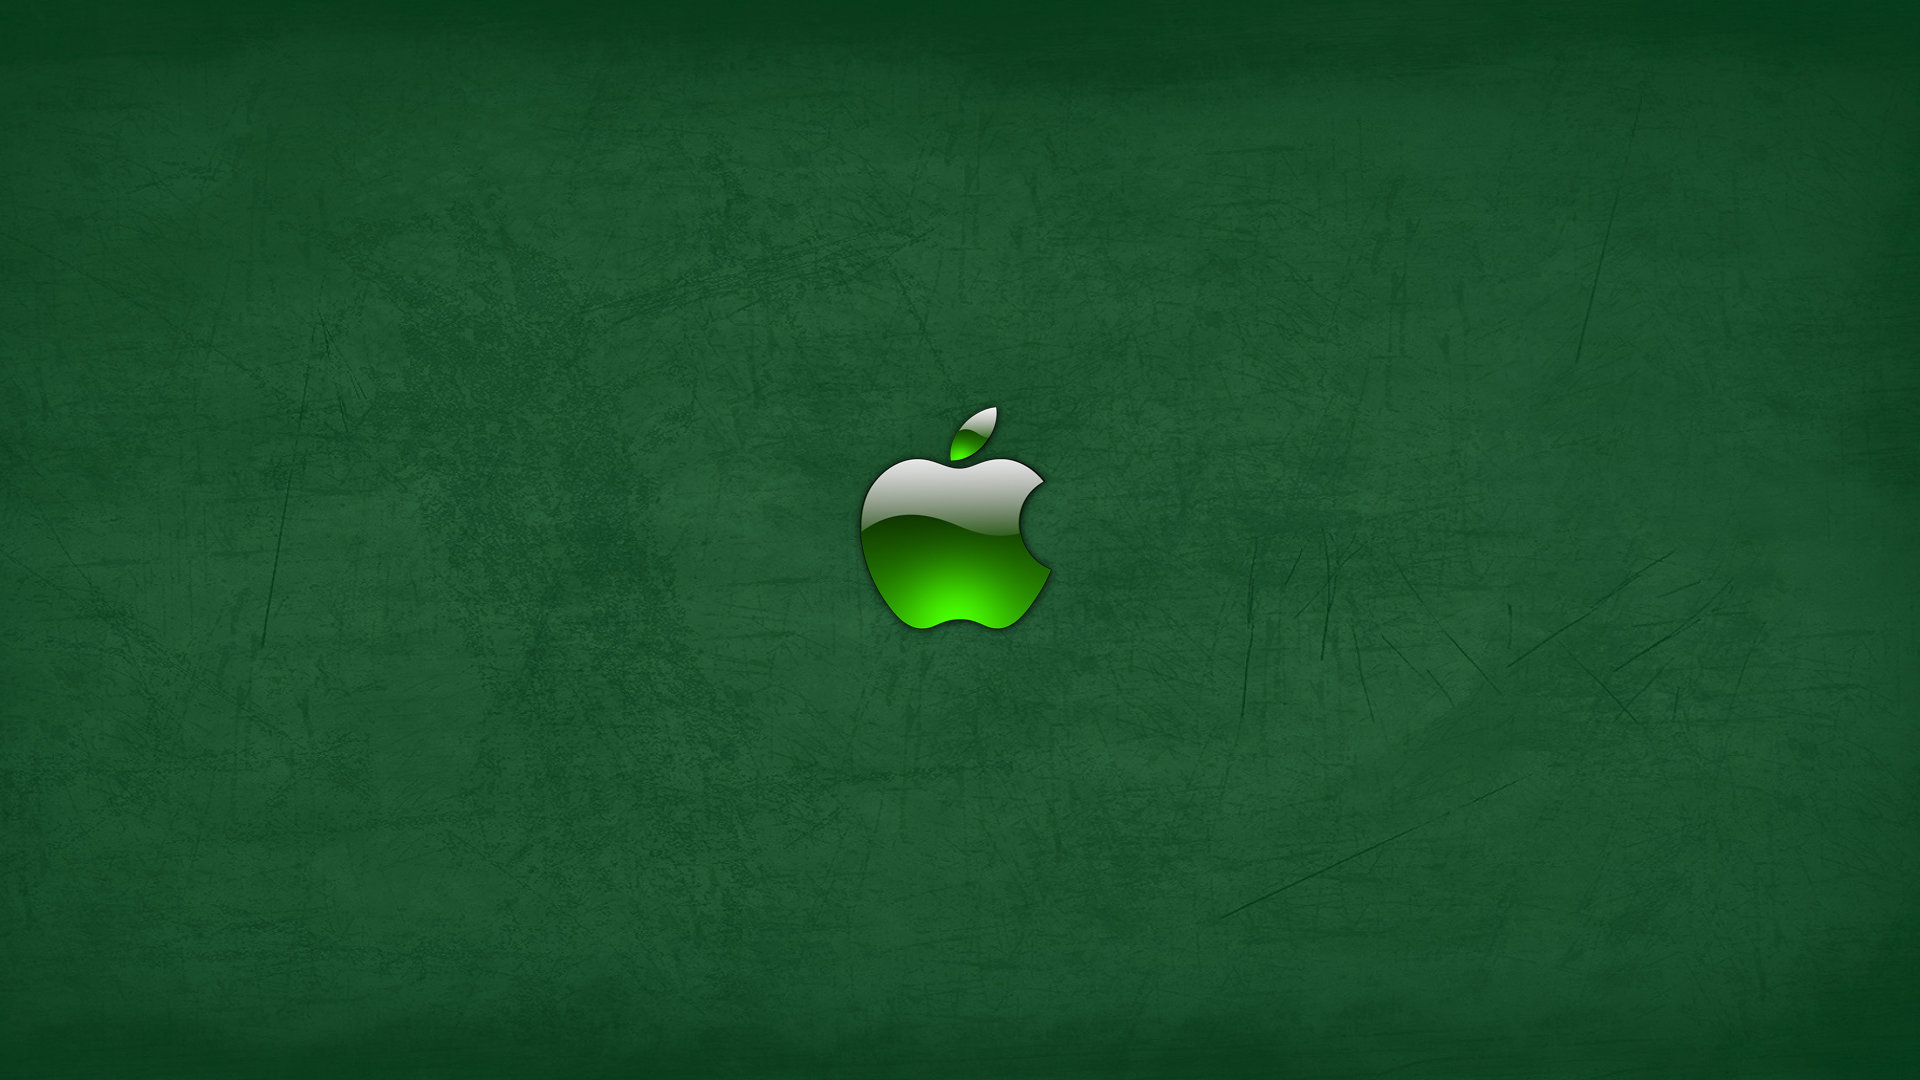 apple wallpaper hd,verde,mela,erba,pianta